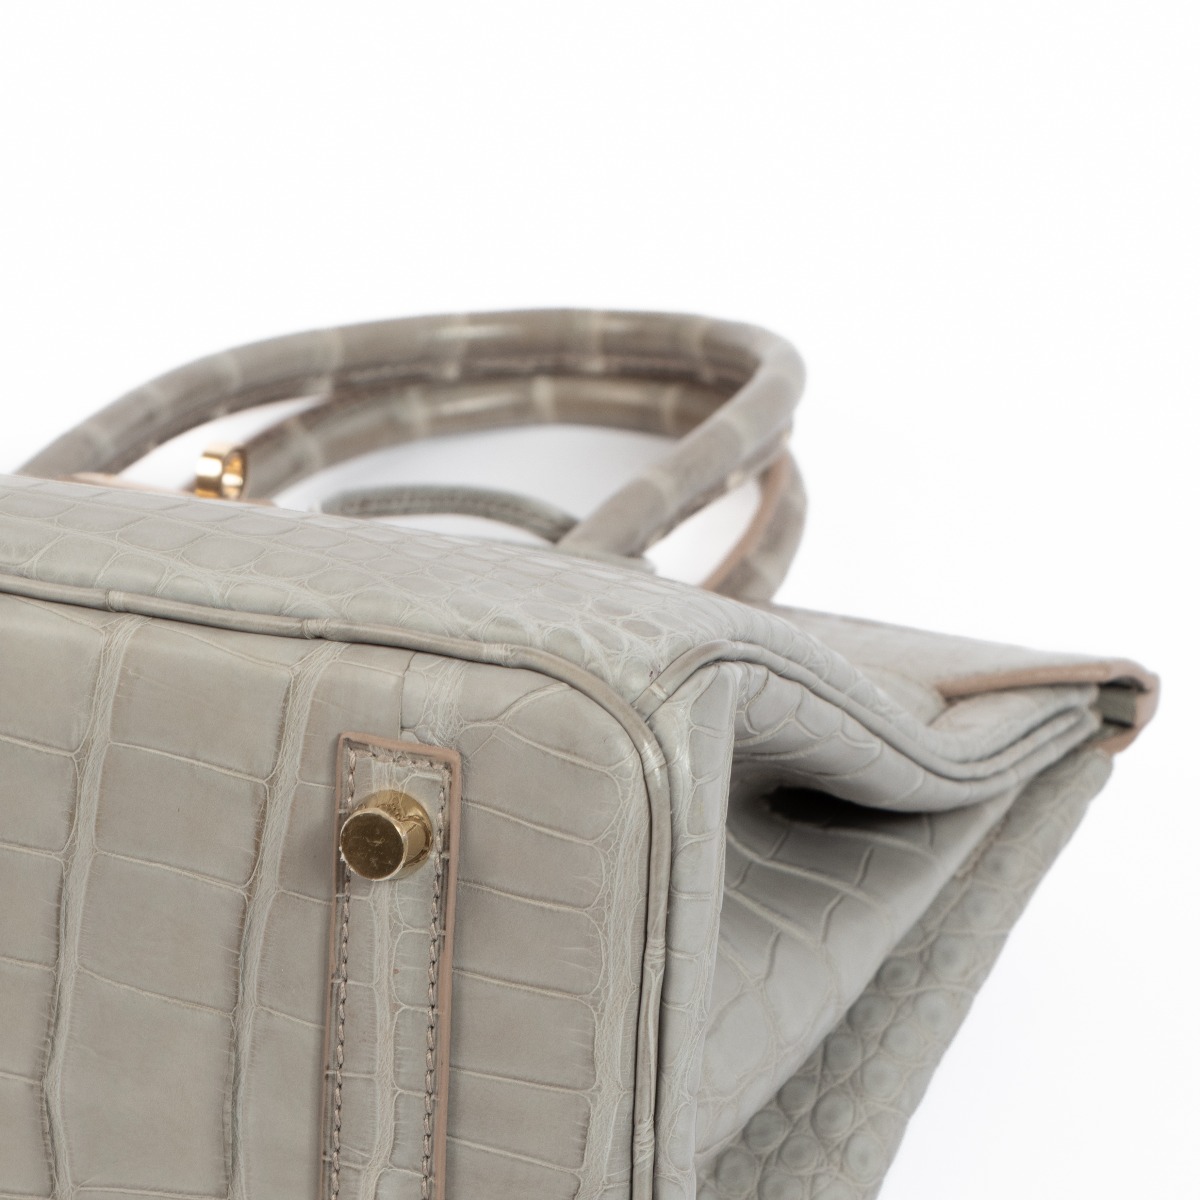 Hermès Birkin Ghillies 30 Bag Beton Limited Edition - Alligator